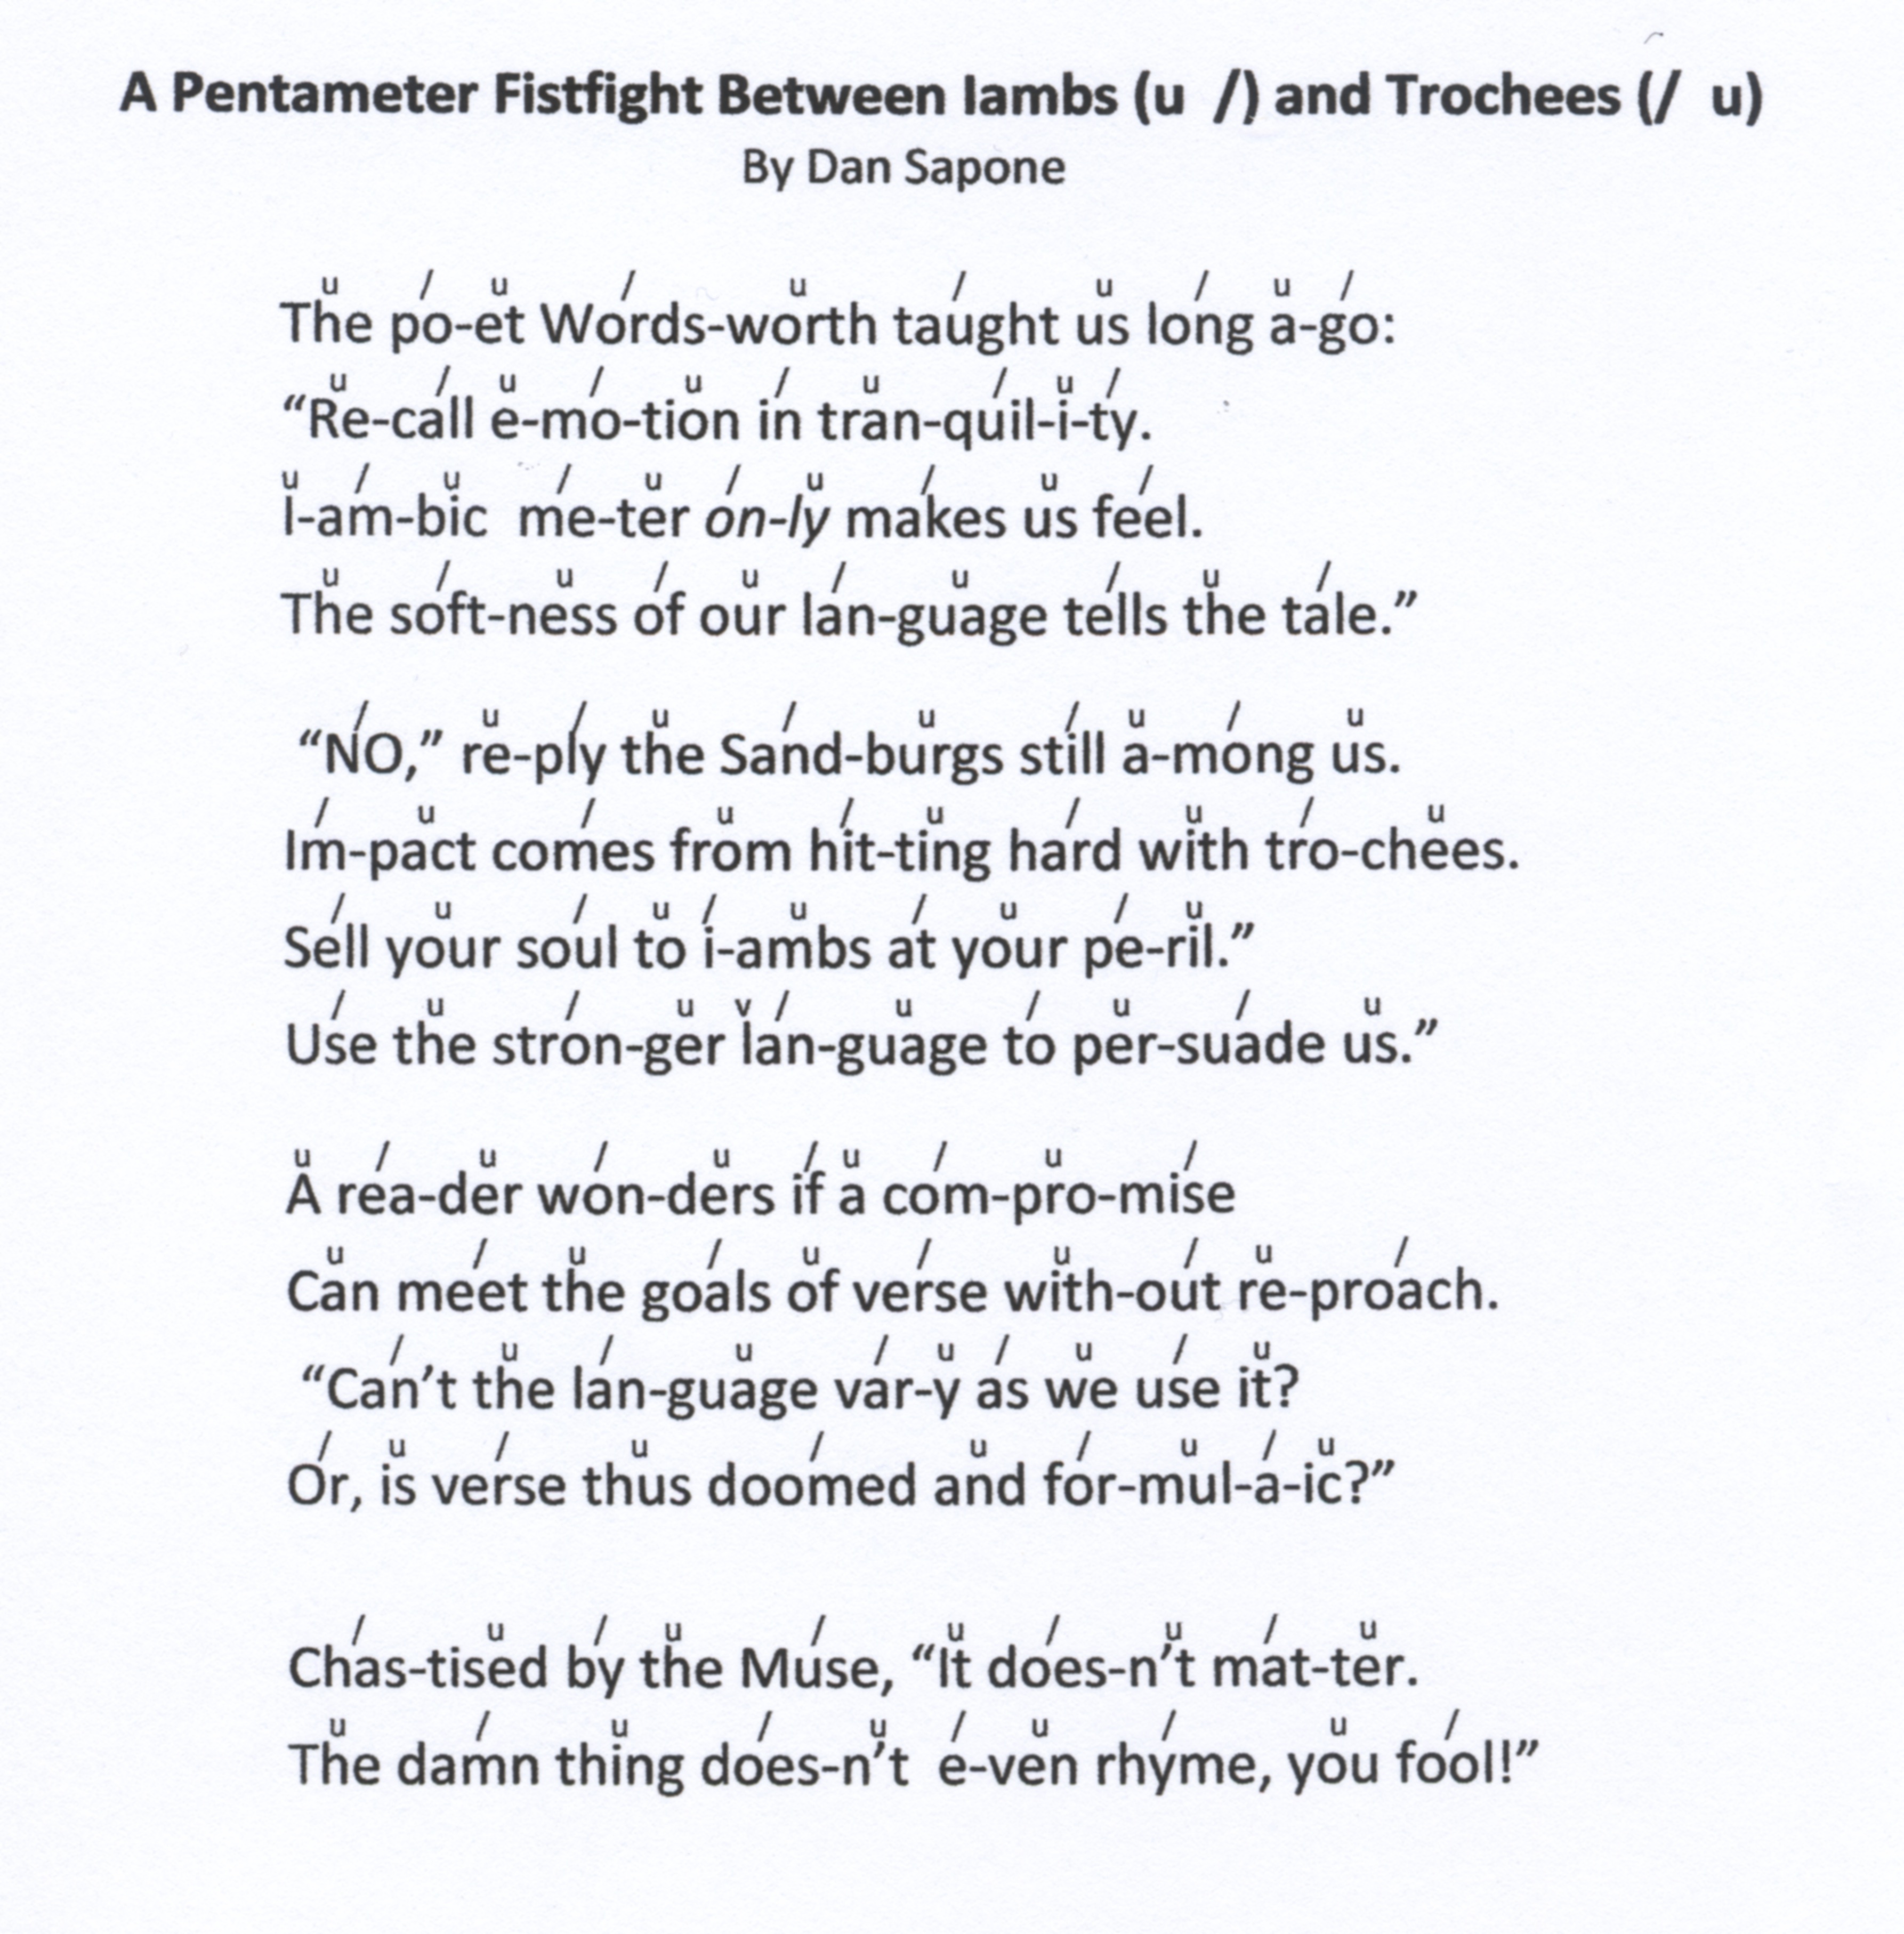 iambic pentameter shakespeare sonnet